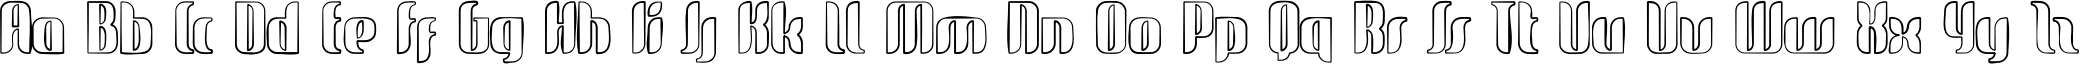 Пример написания английского алфавита шрифтом glide sketch sketch